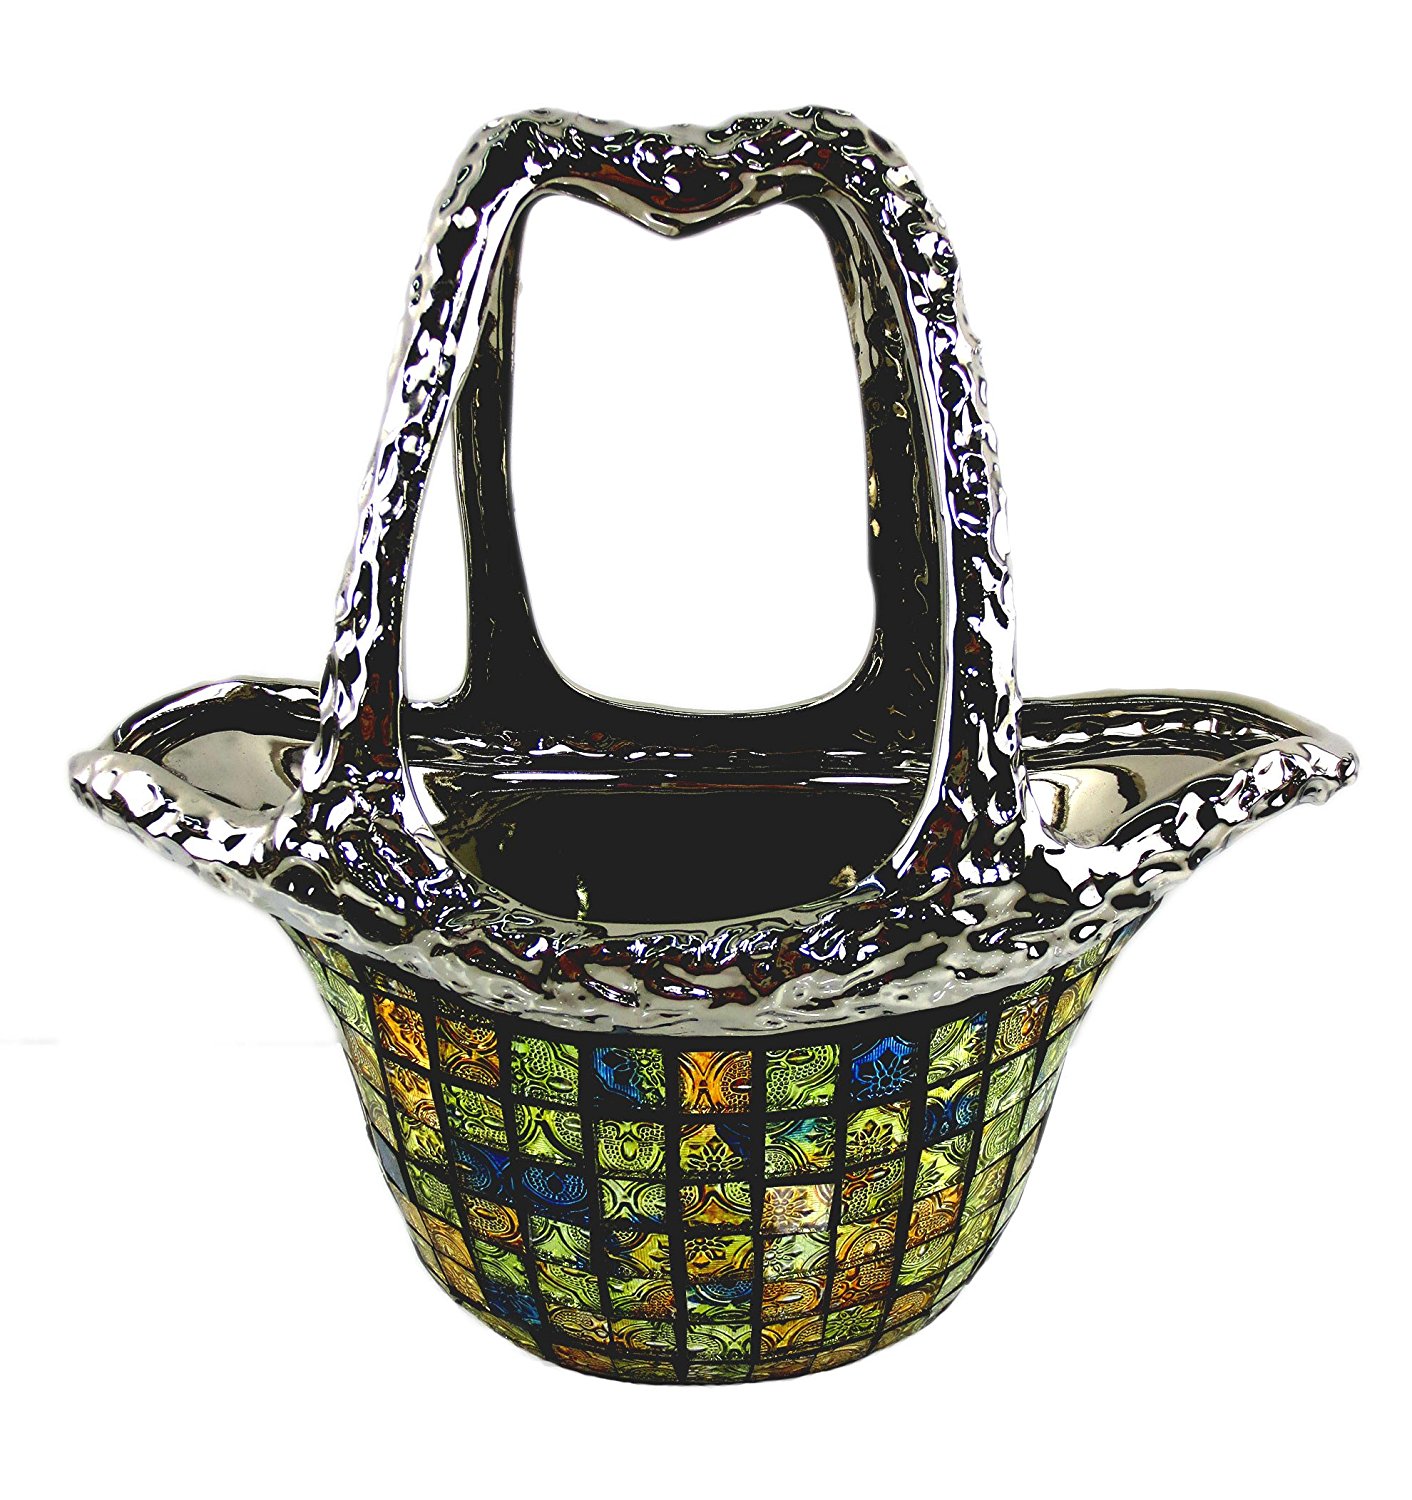 Dmcv005 Decorative Ceramic & Glass Flower Vase Purse Bag - 12.5 X 6.5 X 12 In.